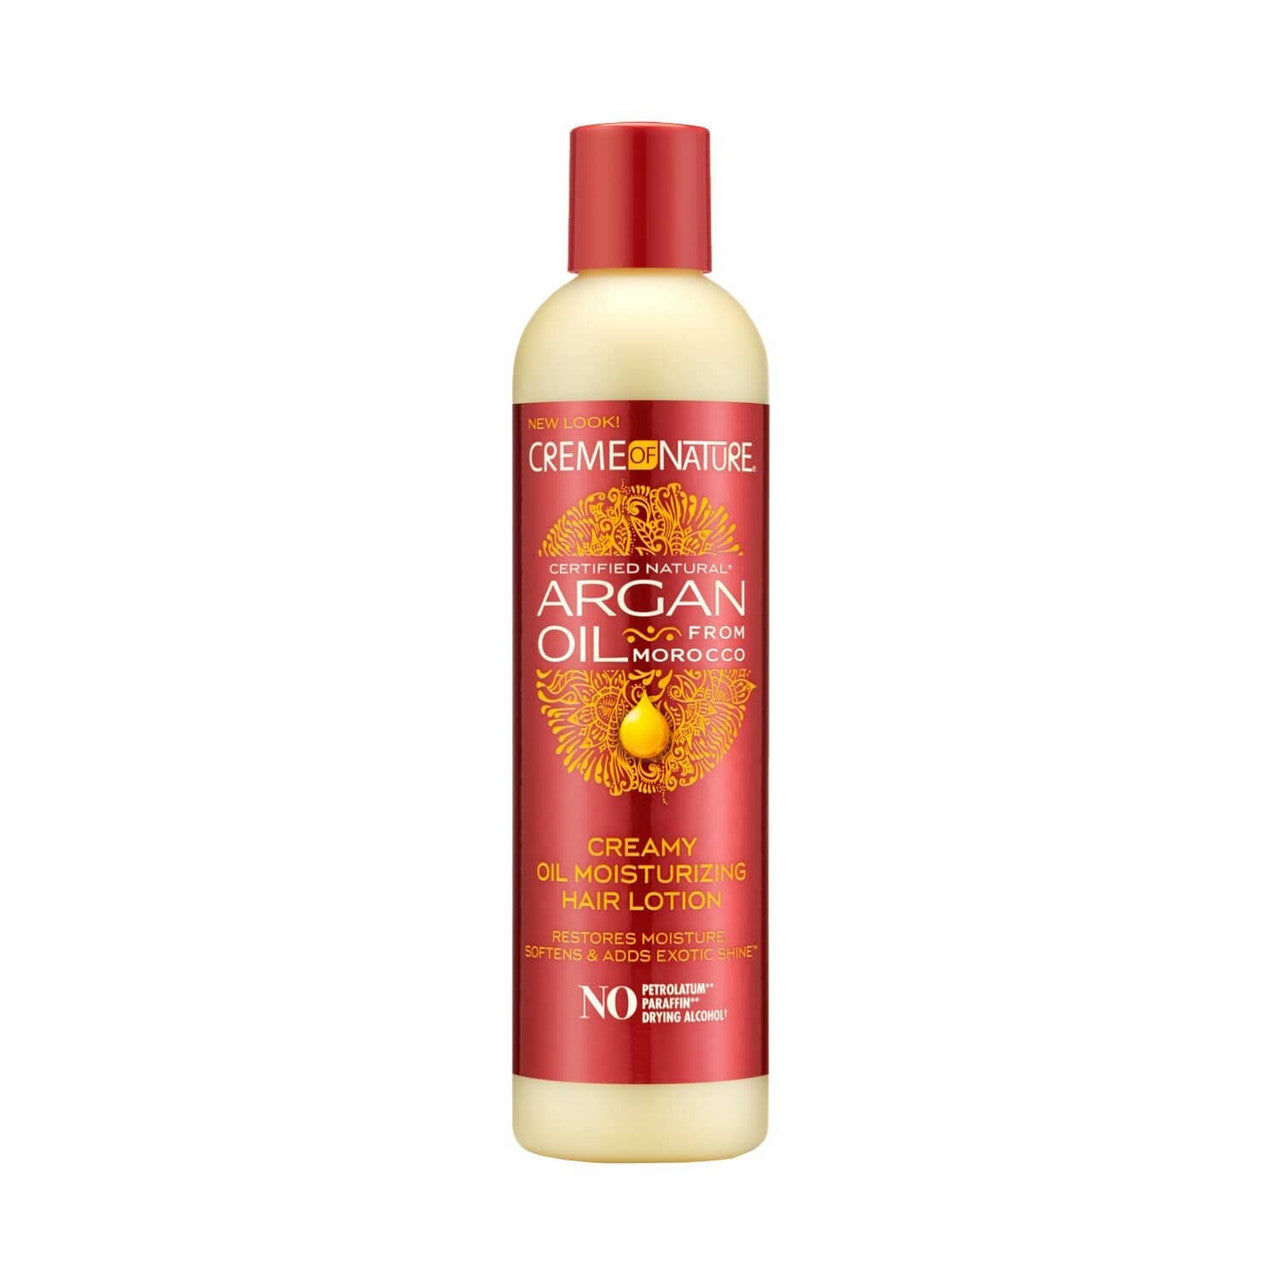 Creme of Nature Argan Oil Creamy Oil Moisturizing Hair Lotion 8.45oz